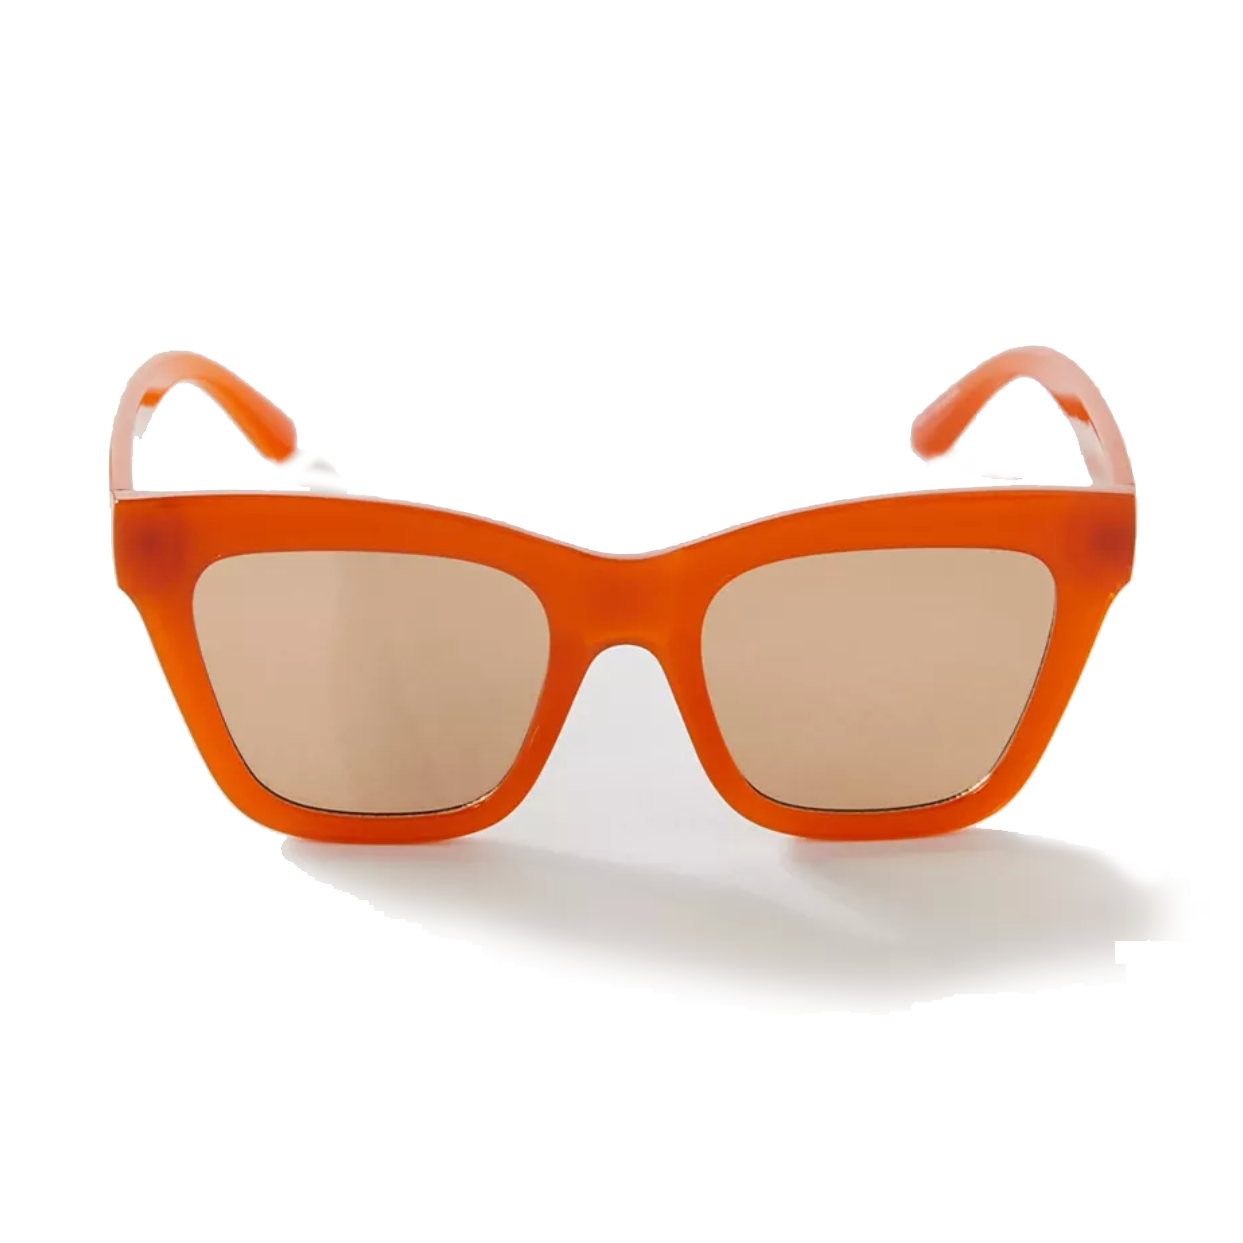 Orange Sunglasses, $18